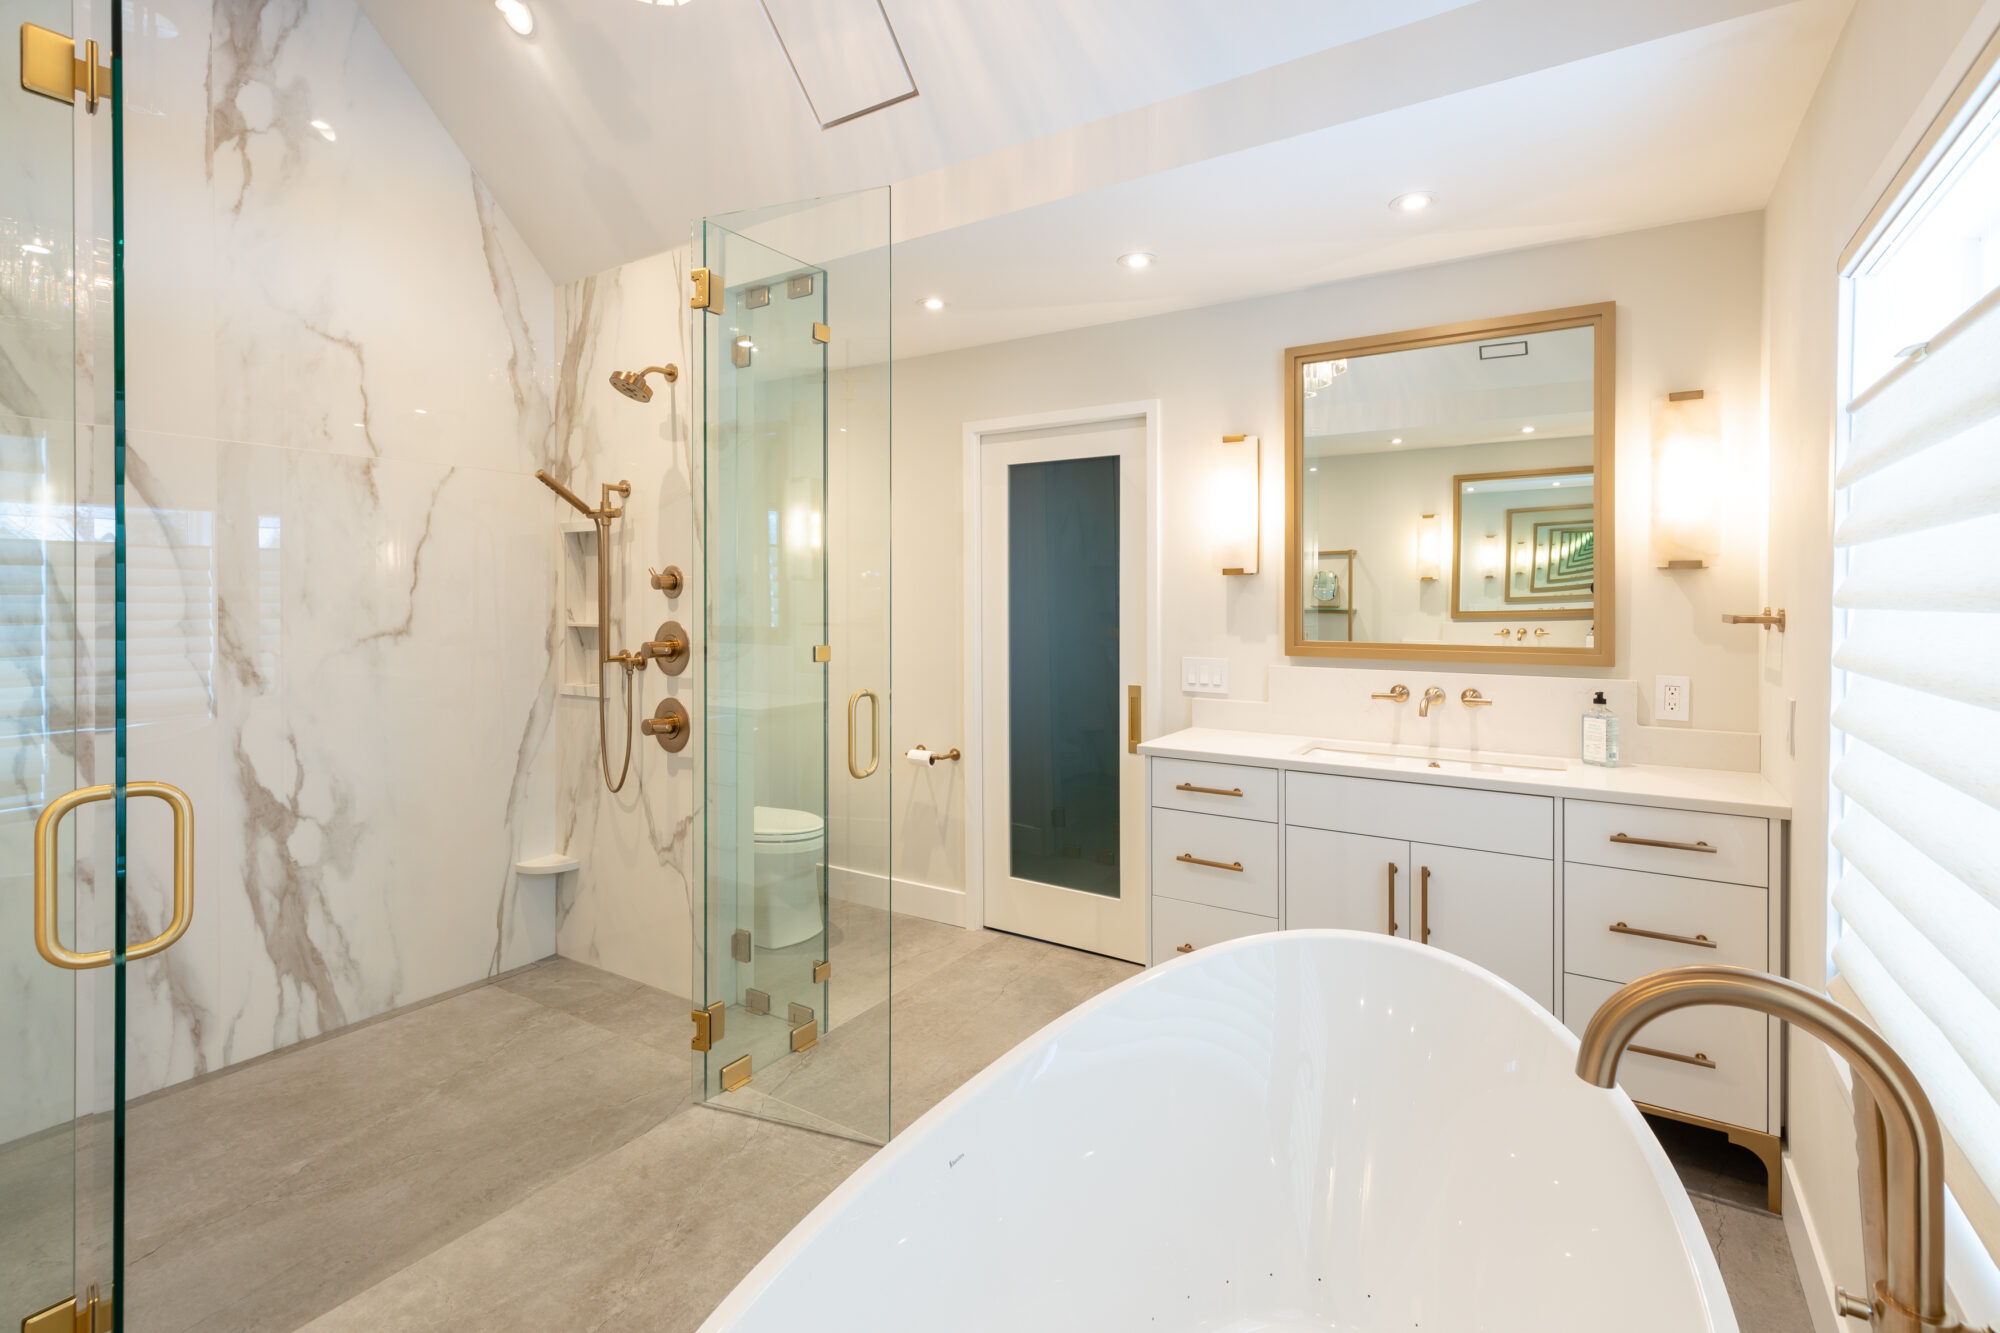 Beautiful bathroom remodel by R.E. McNamara Inc. showcasing an off-white palette, walk-in glass shower, freestanding tub, and sink setup